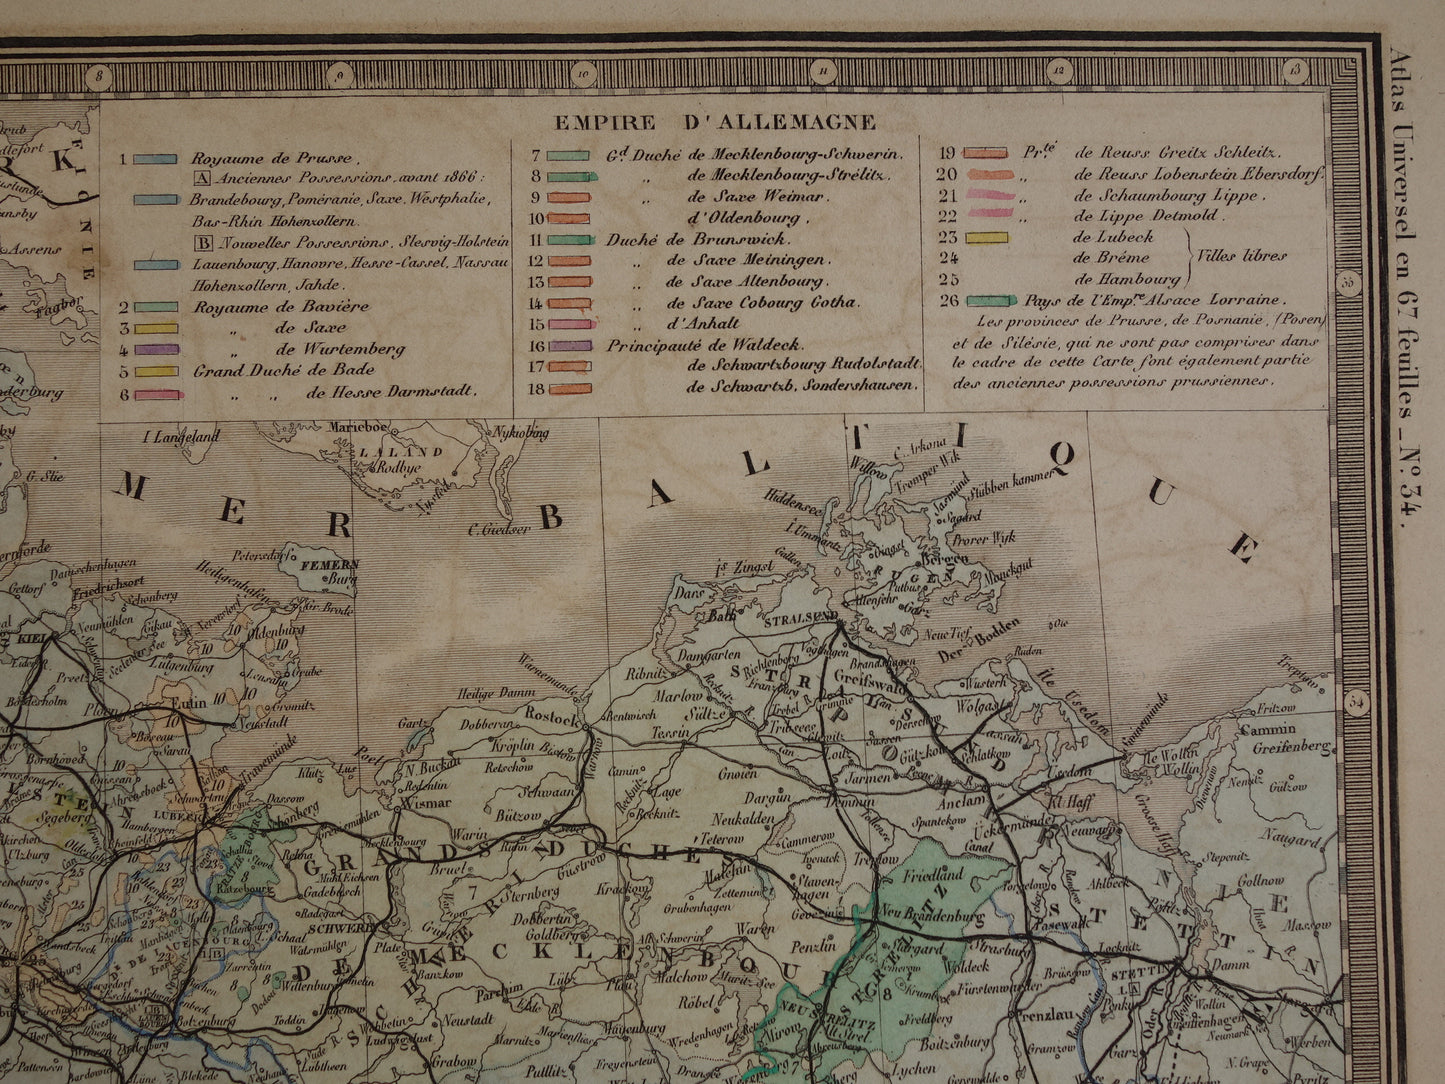 DUITSLAND grote antieke landkaart van het Duitse Rijk uit 1876 originele oude vintage kaart